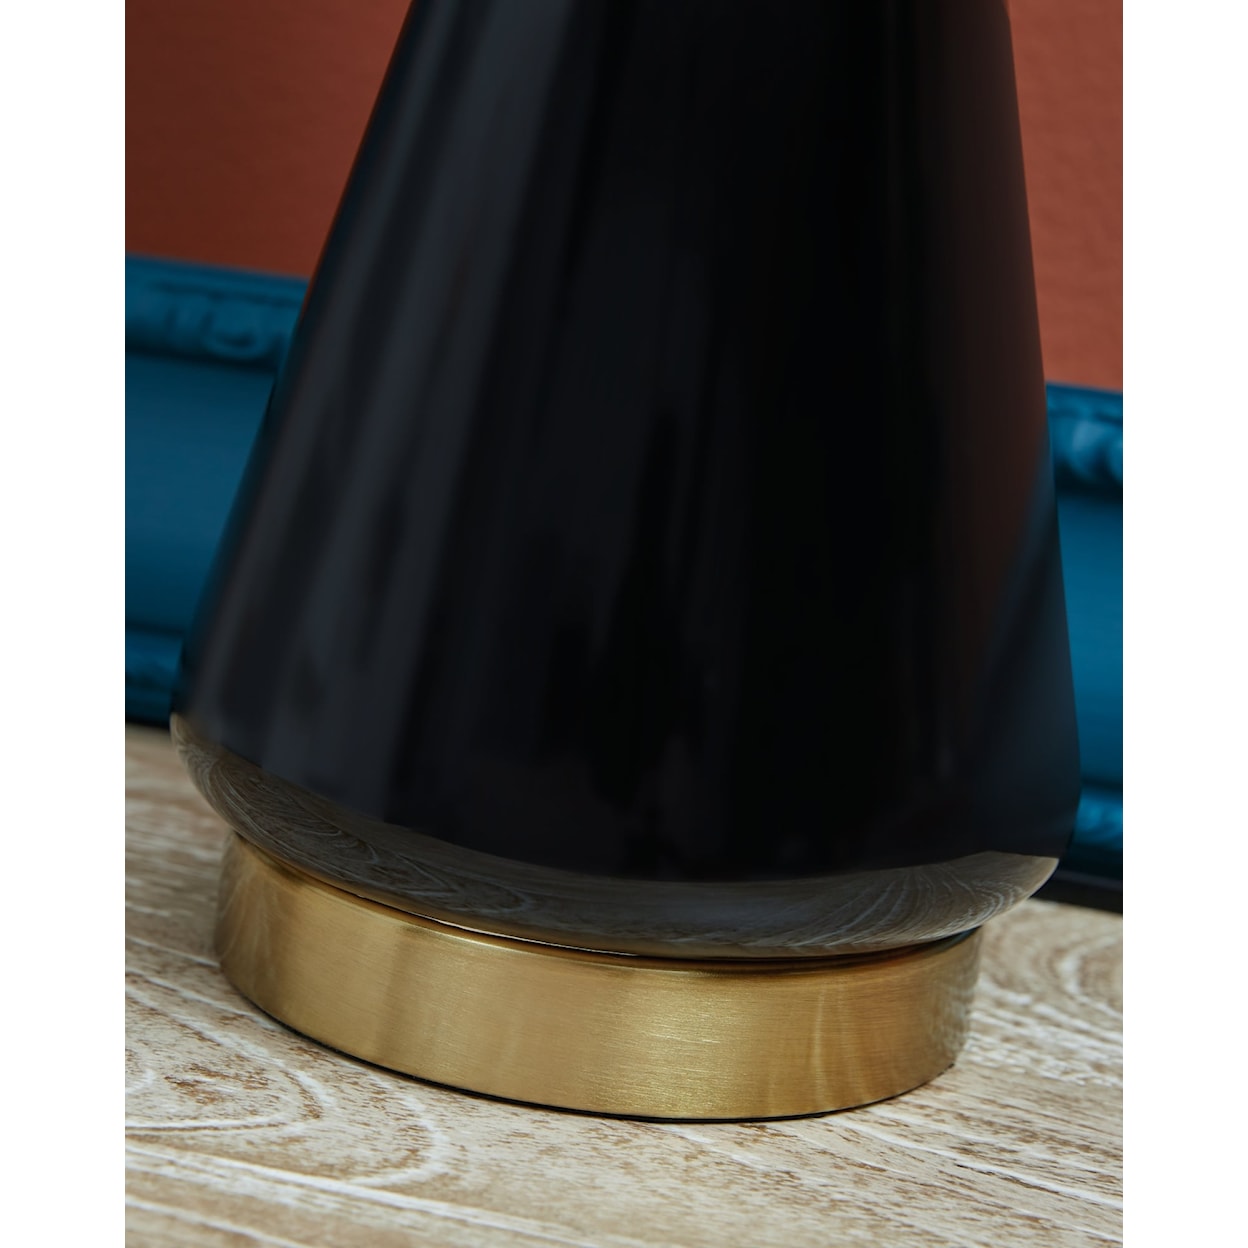 Benchcraft Ackson Ceramic Table Lamp (Set of 2)